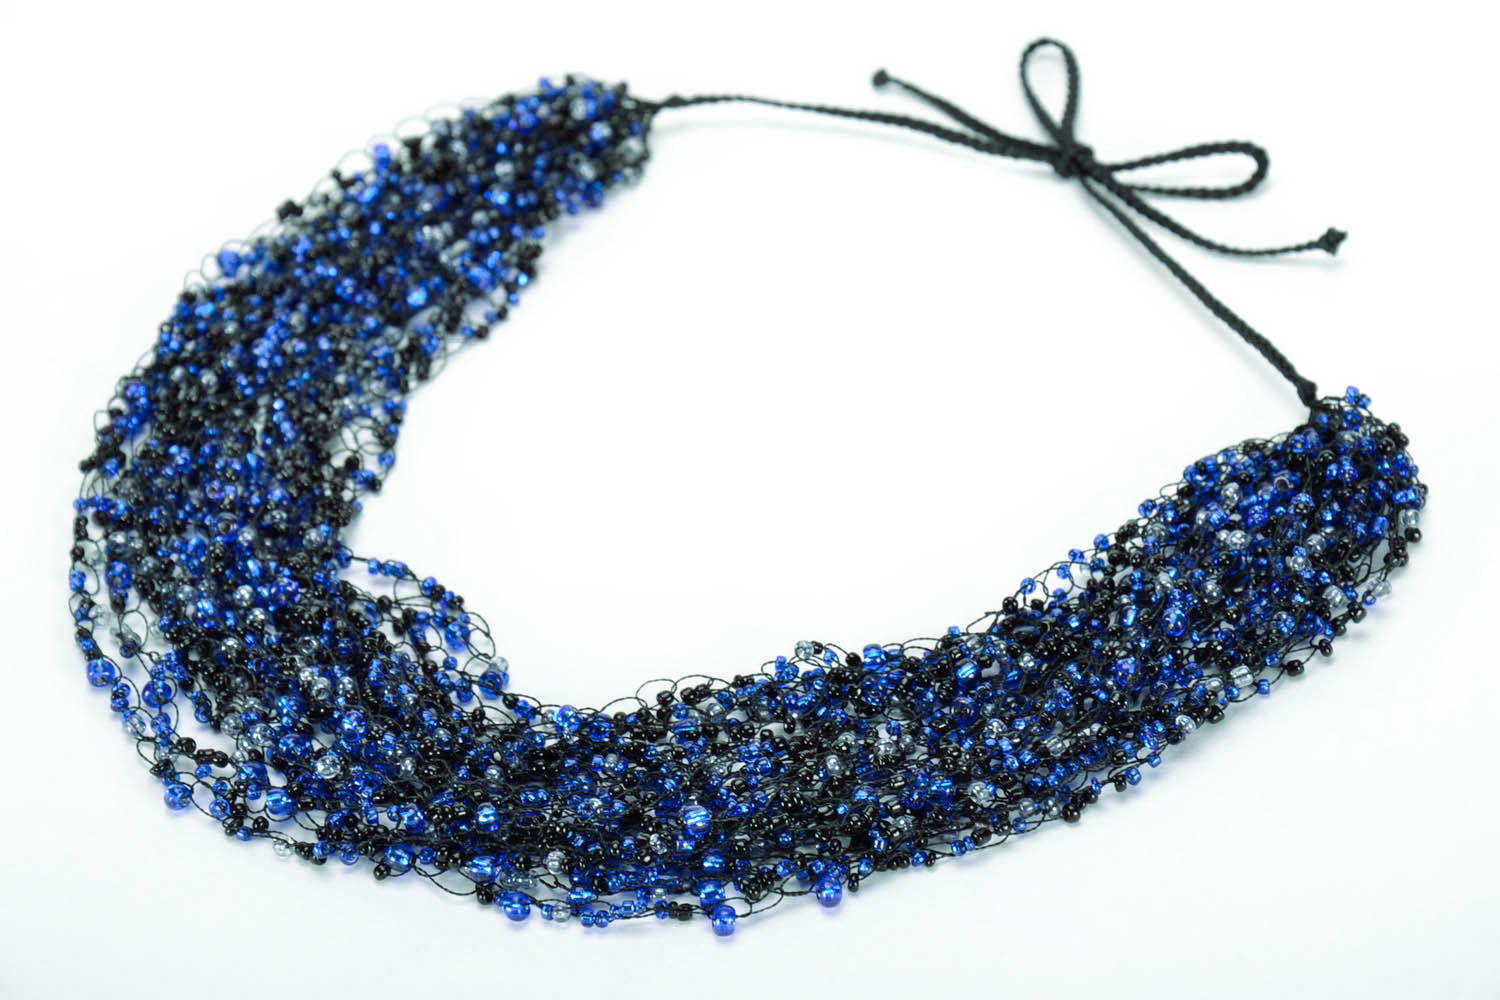 BUY Dark blue Necklace 710142641 - HANDMADE GOODS at MADEHEART.COM